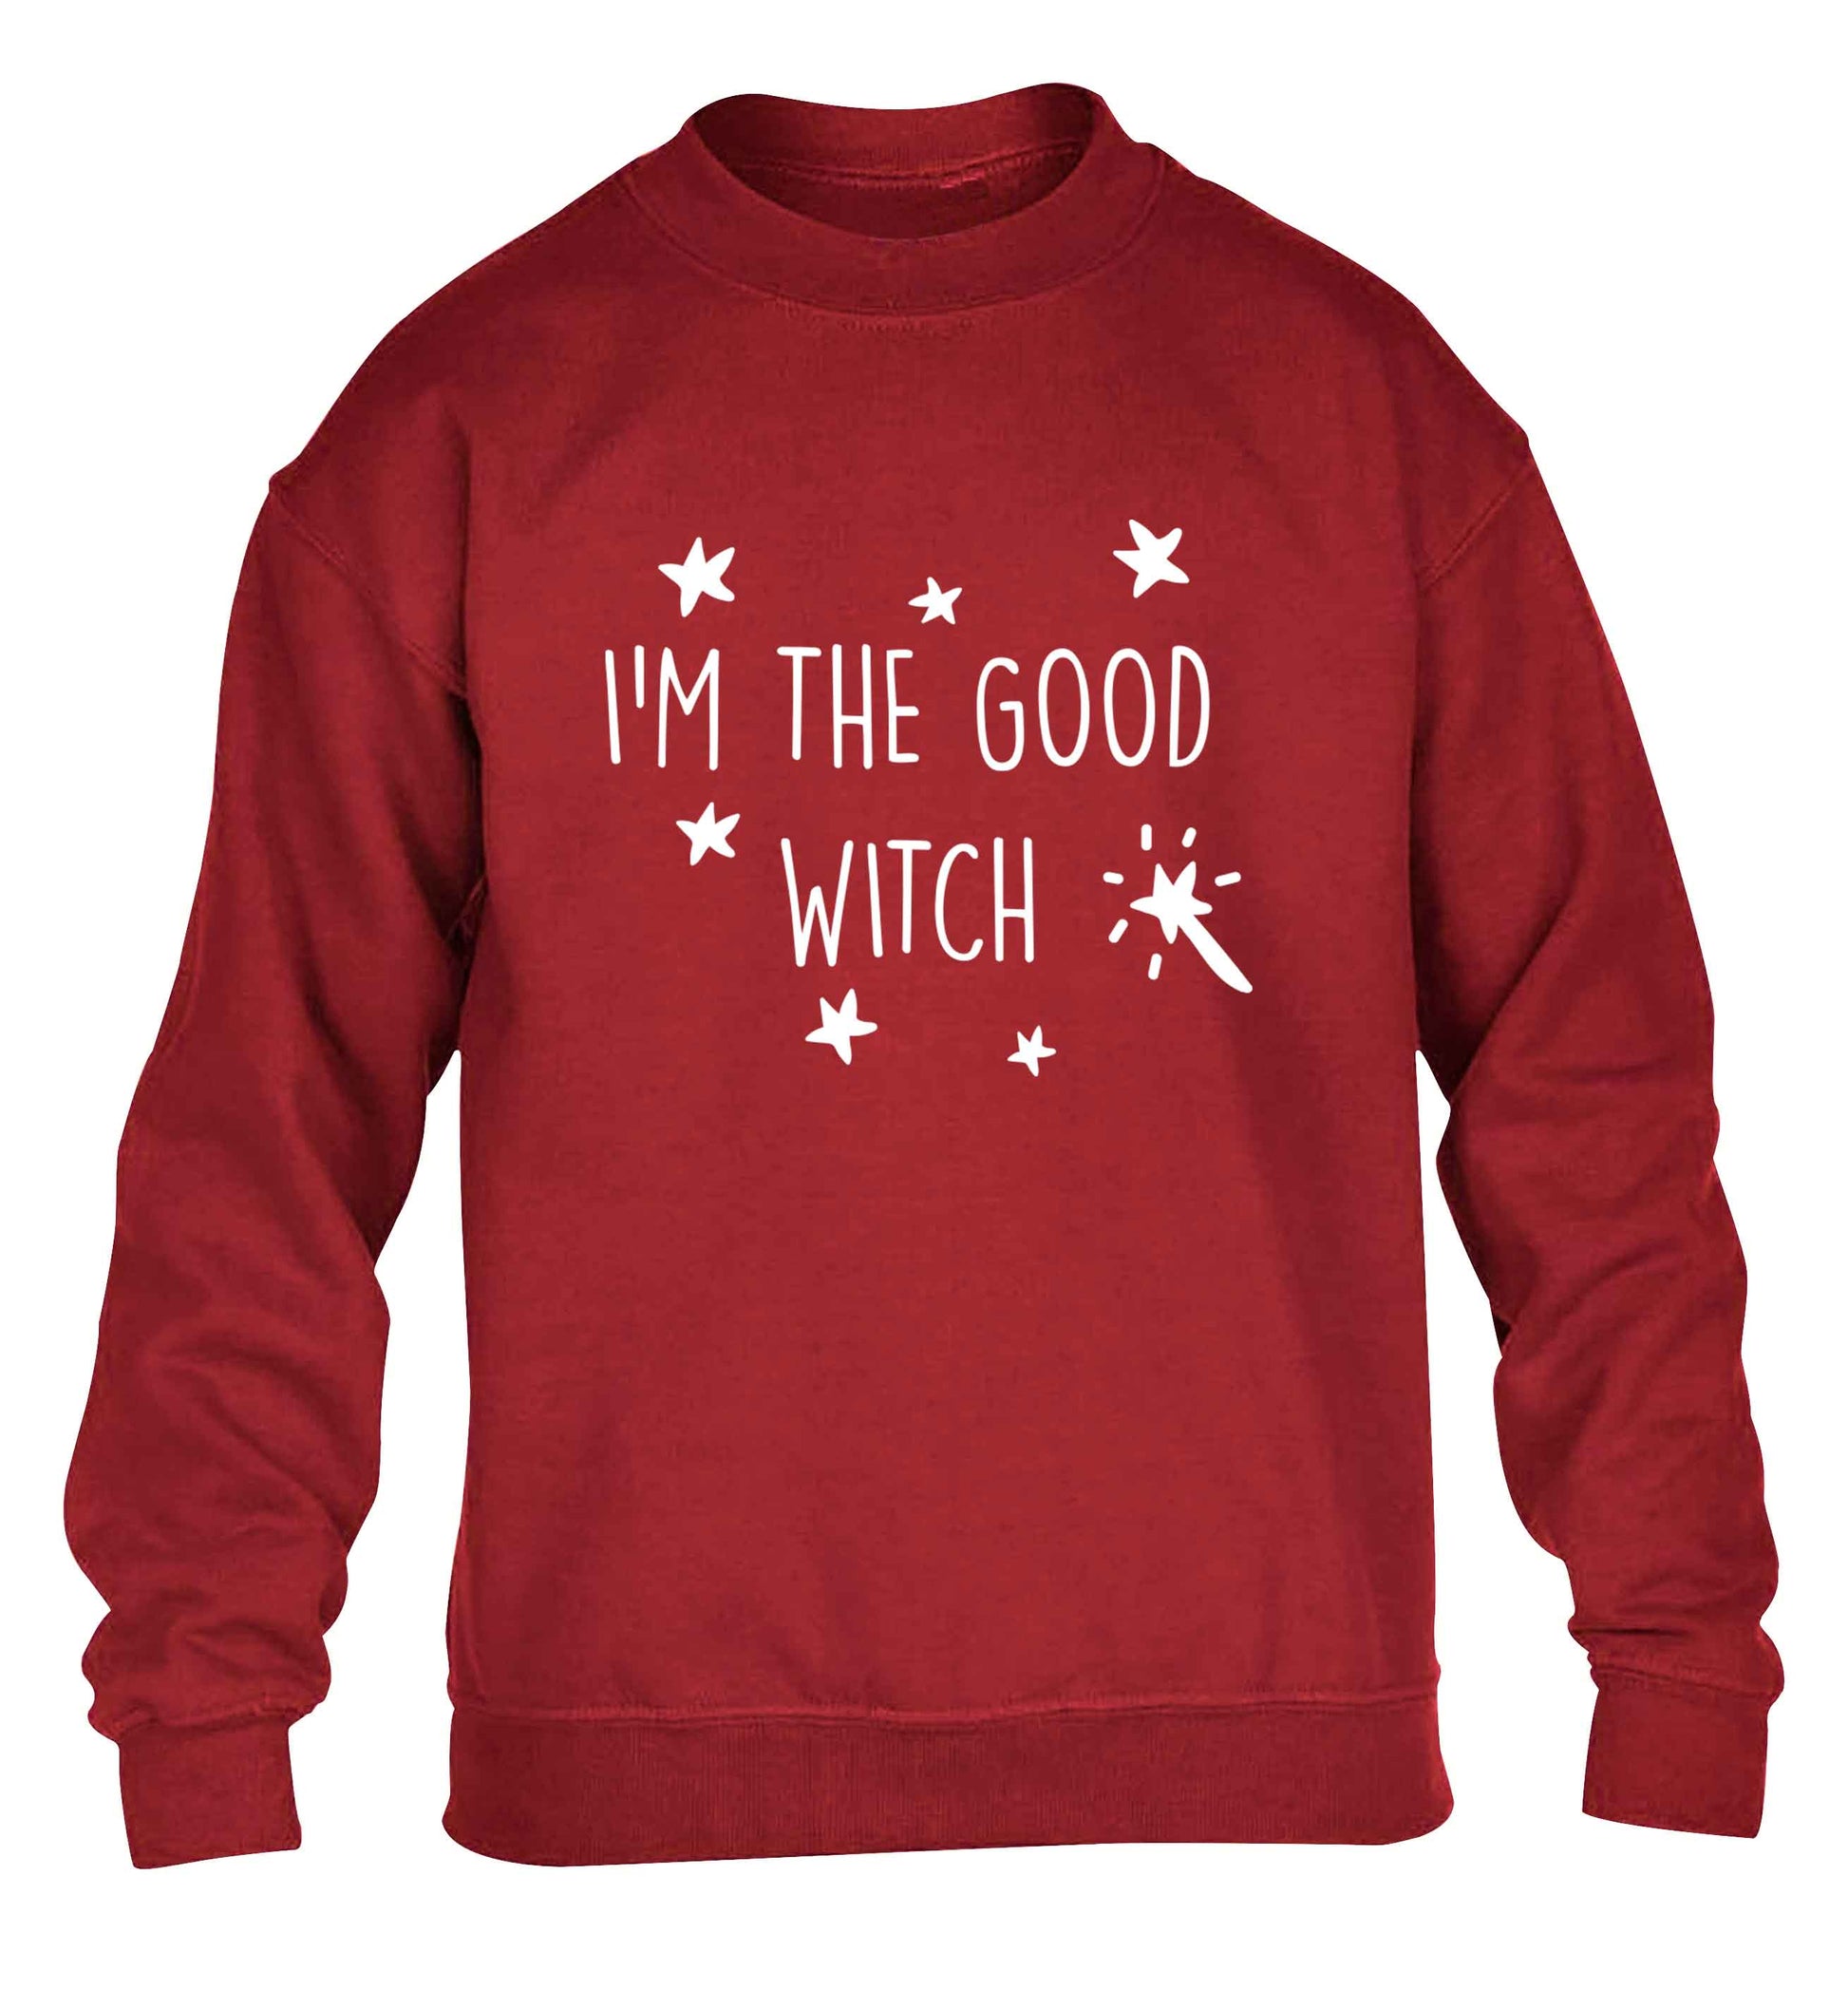 Good witch children's grey sweater 12-13 Years